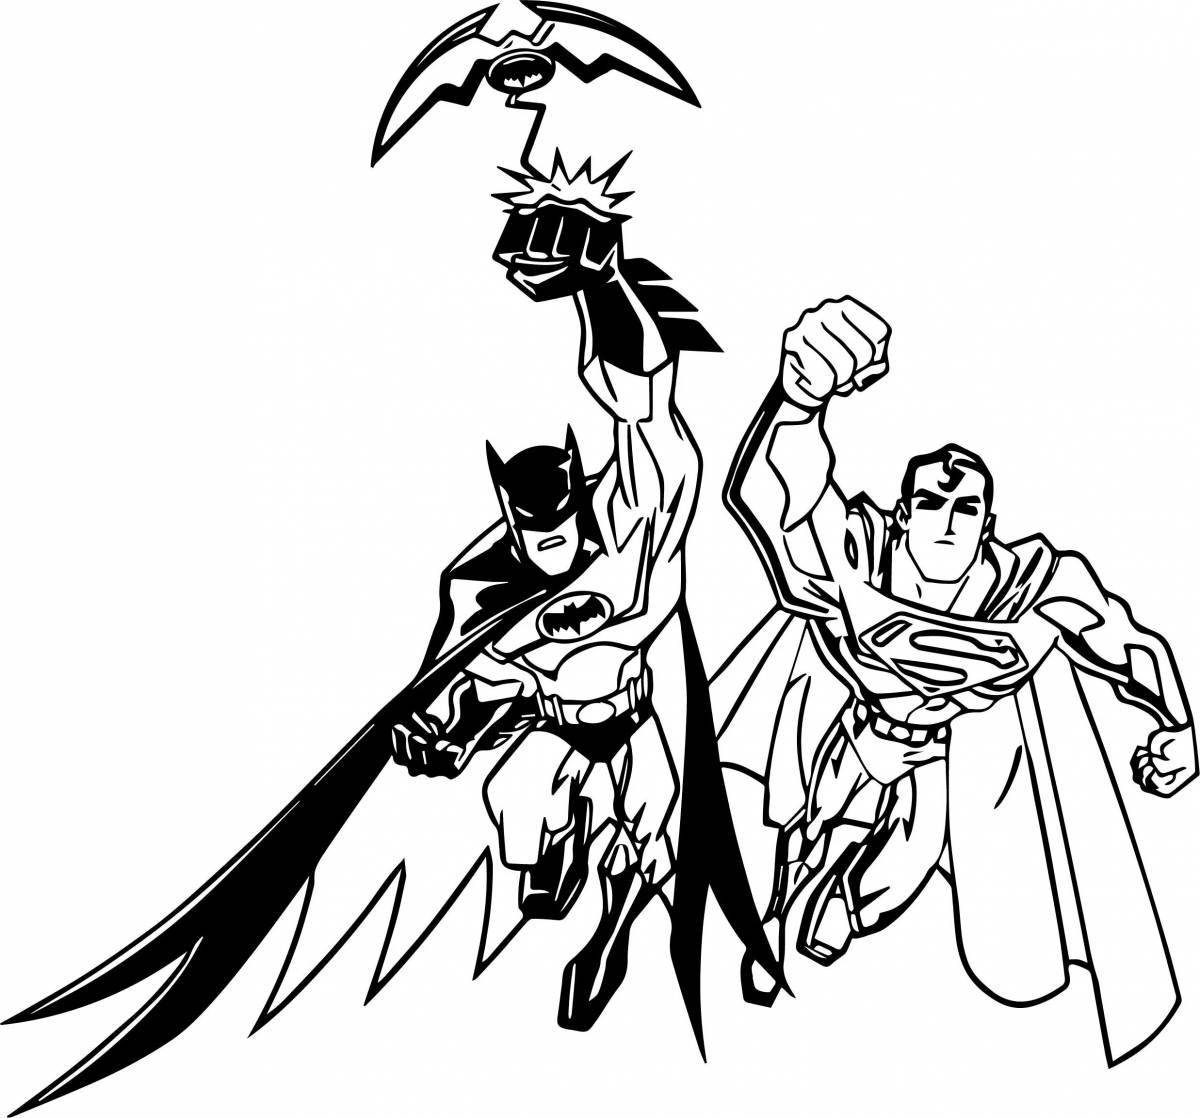 Brave superman and batman coloring book